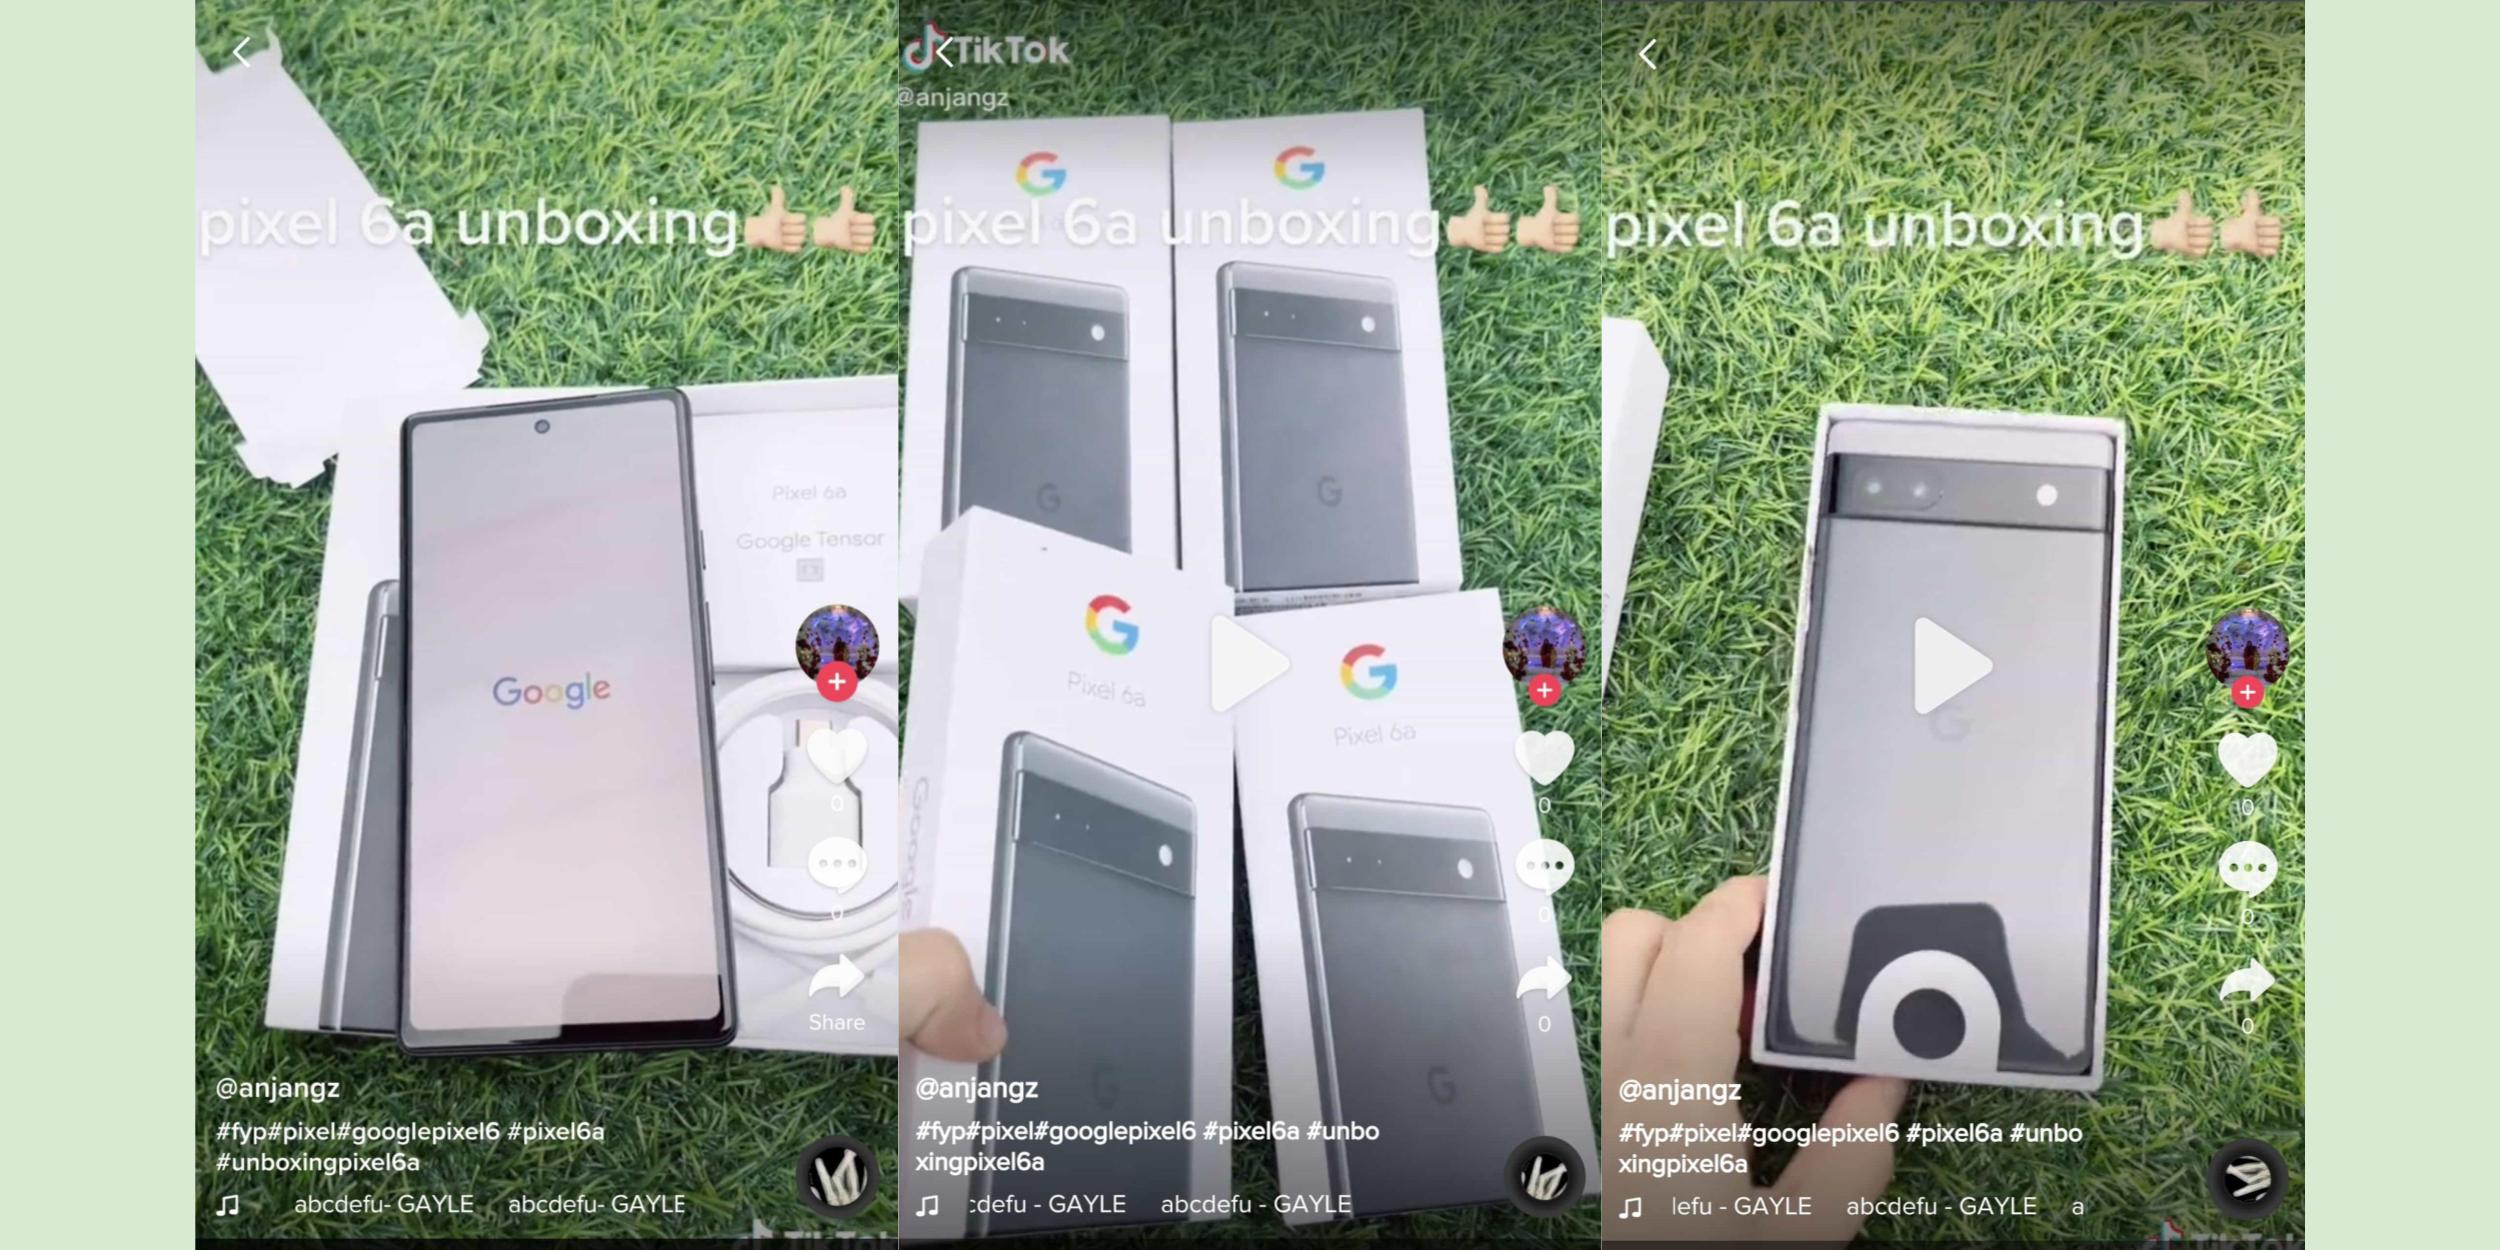 Google Pixel 6a hands-on & unboxing video reveals design and specs -  Smartprix Bytes